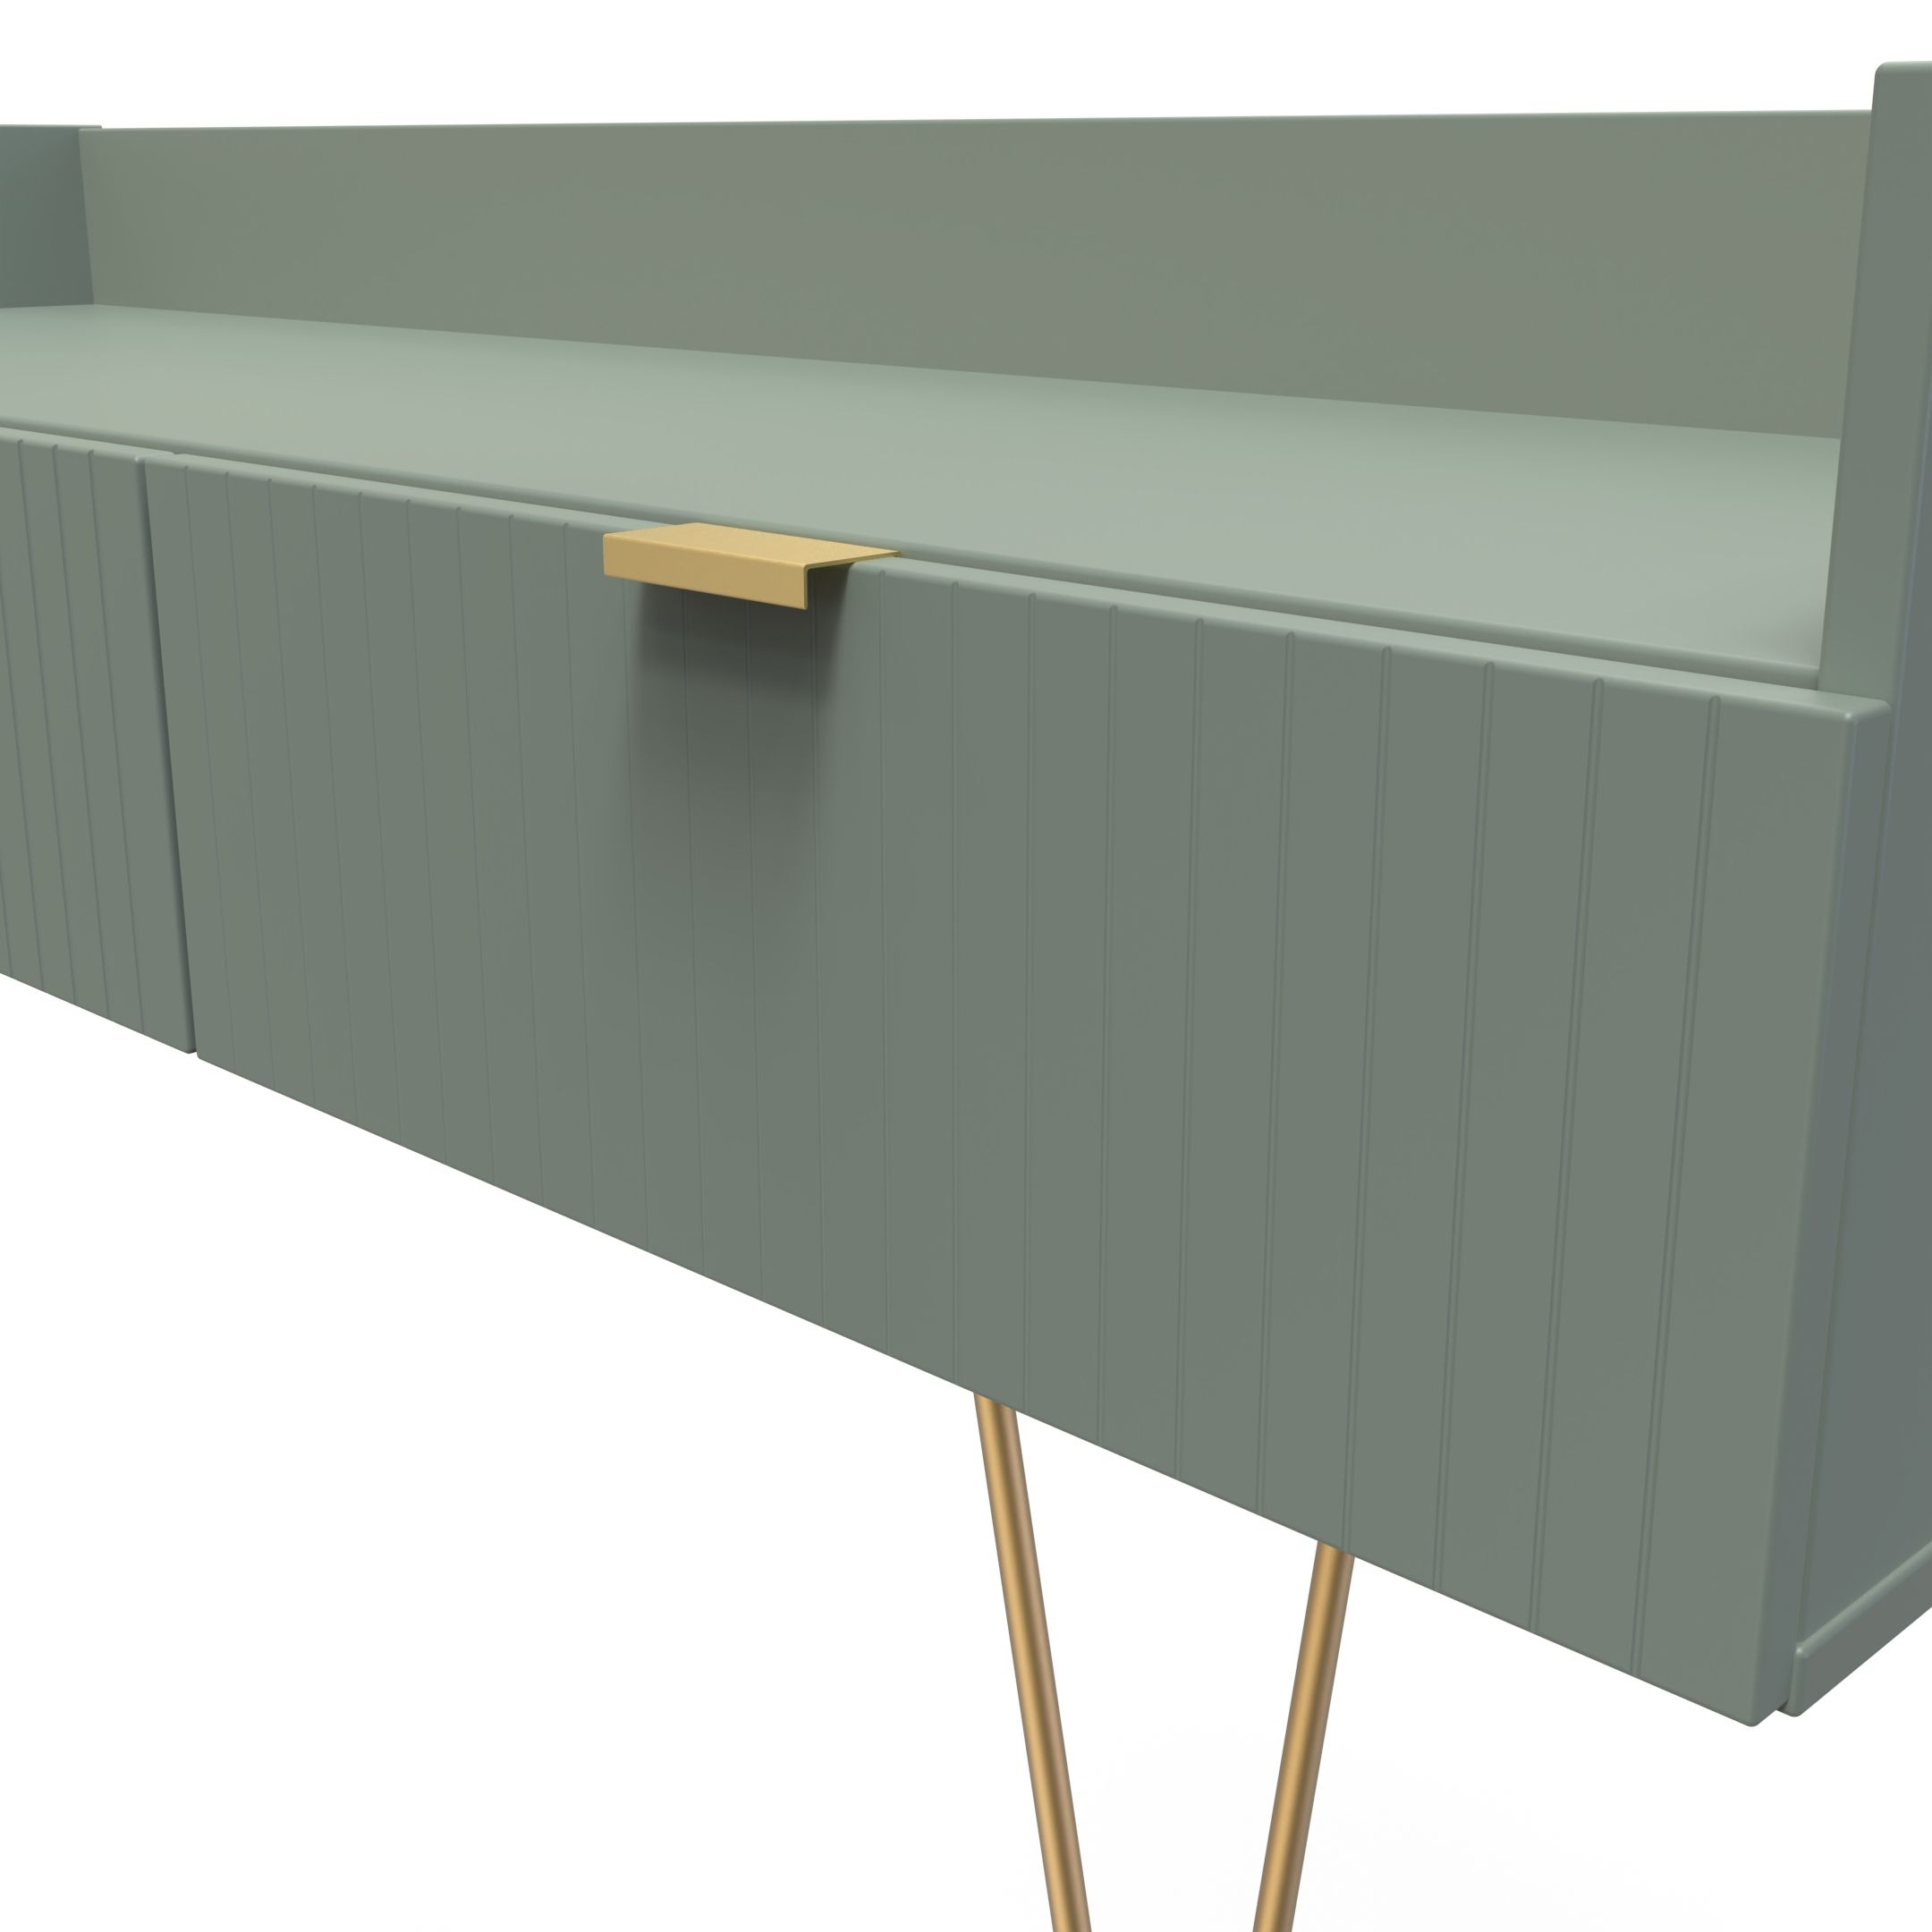 Linear Ready assembled Matt green Media unit with 2 drawers, (H)128cm x (W)51.5cm x (D)39.5cm